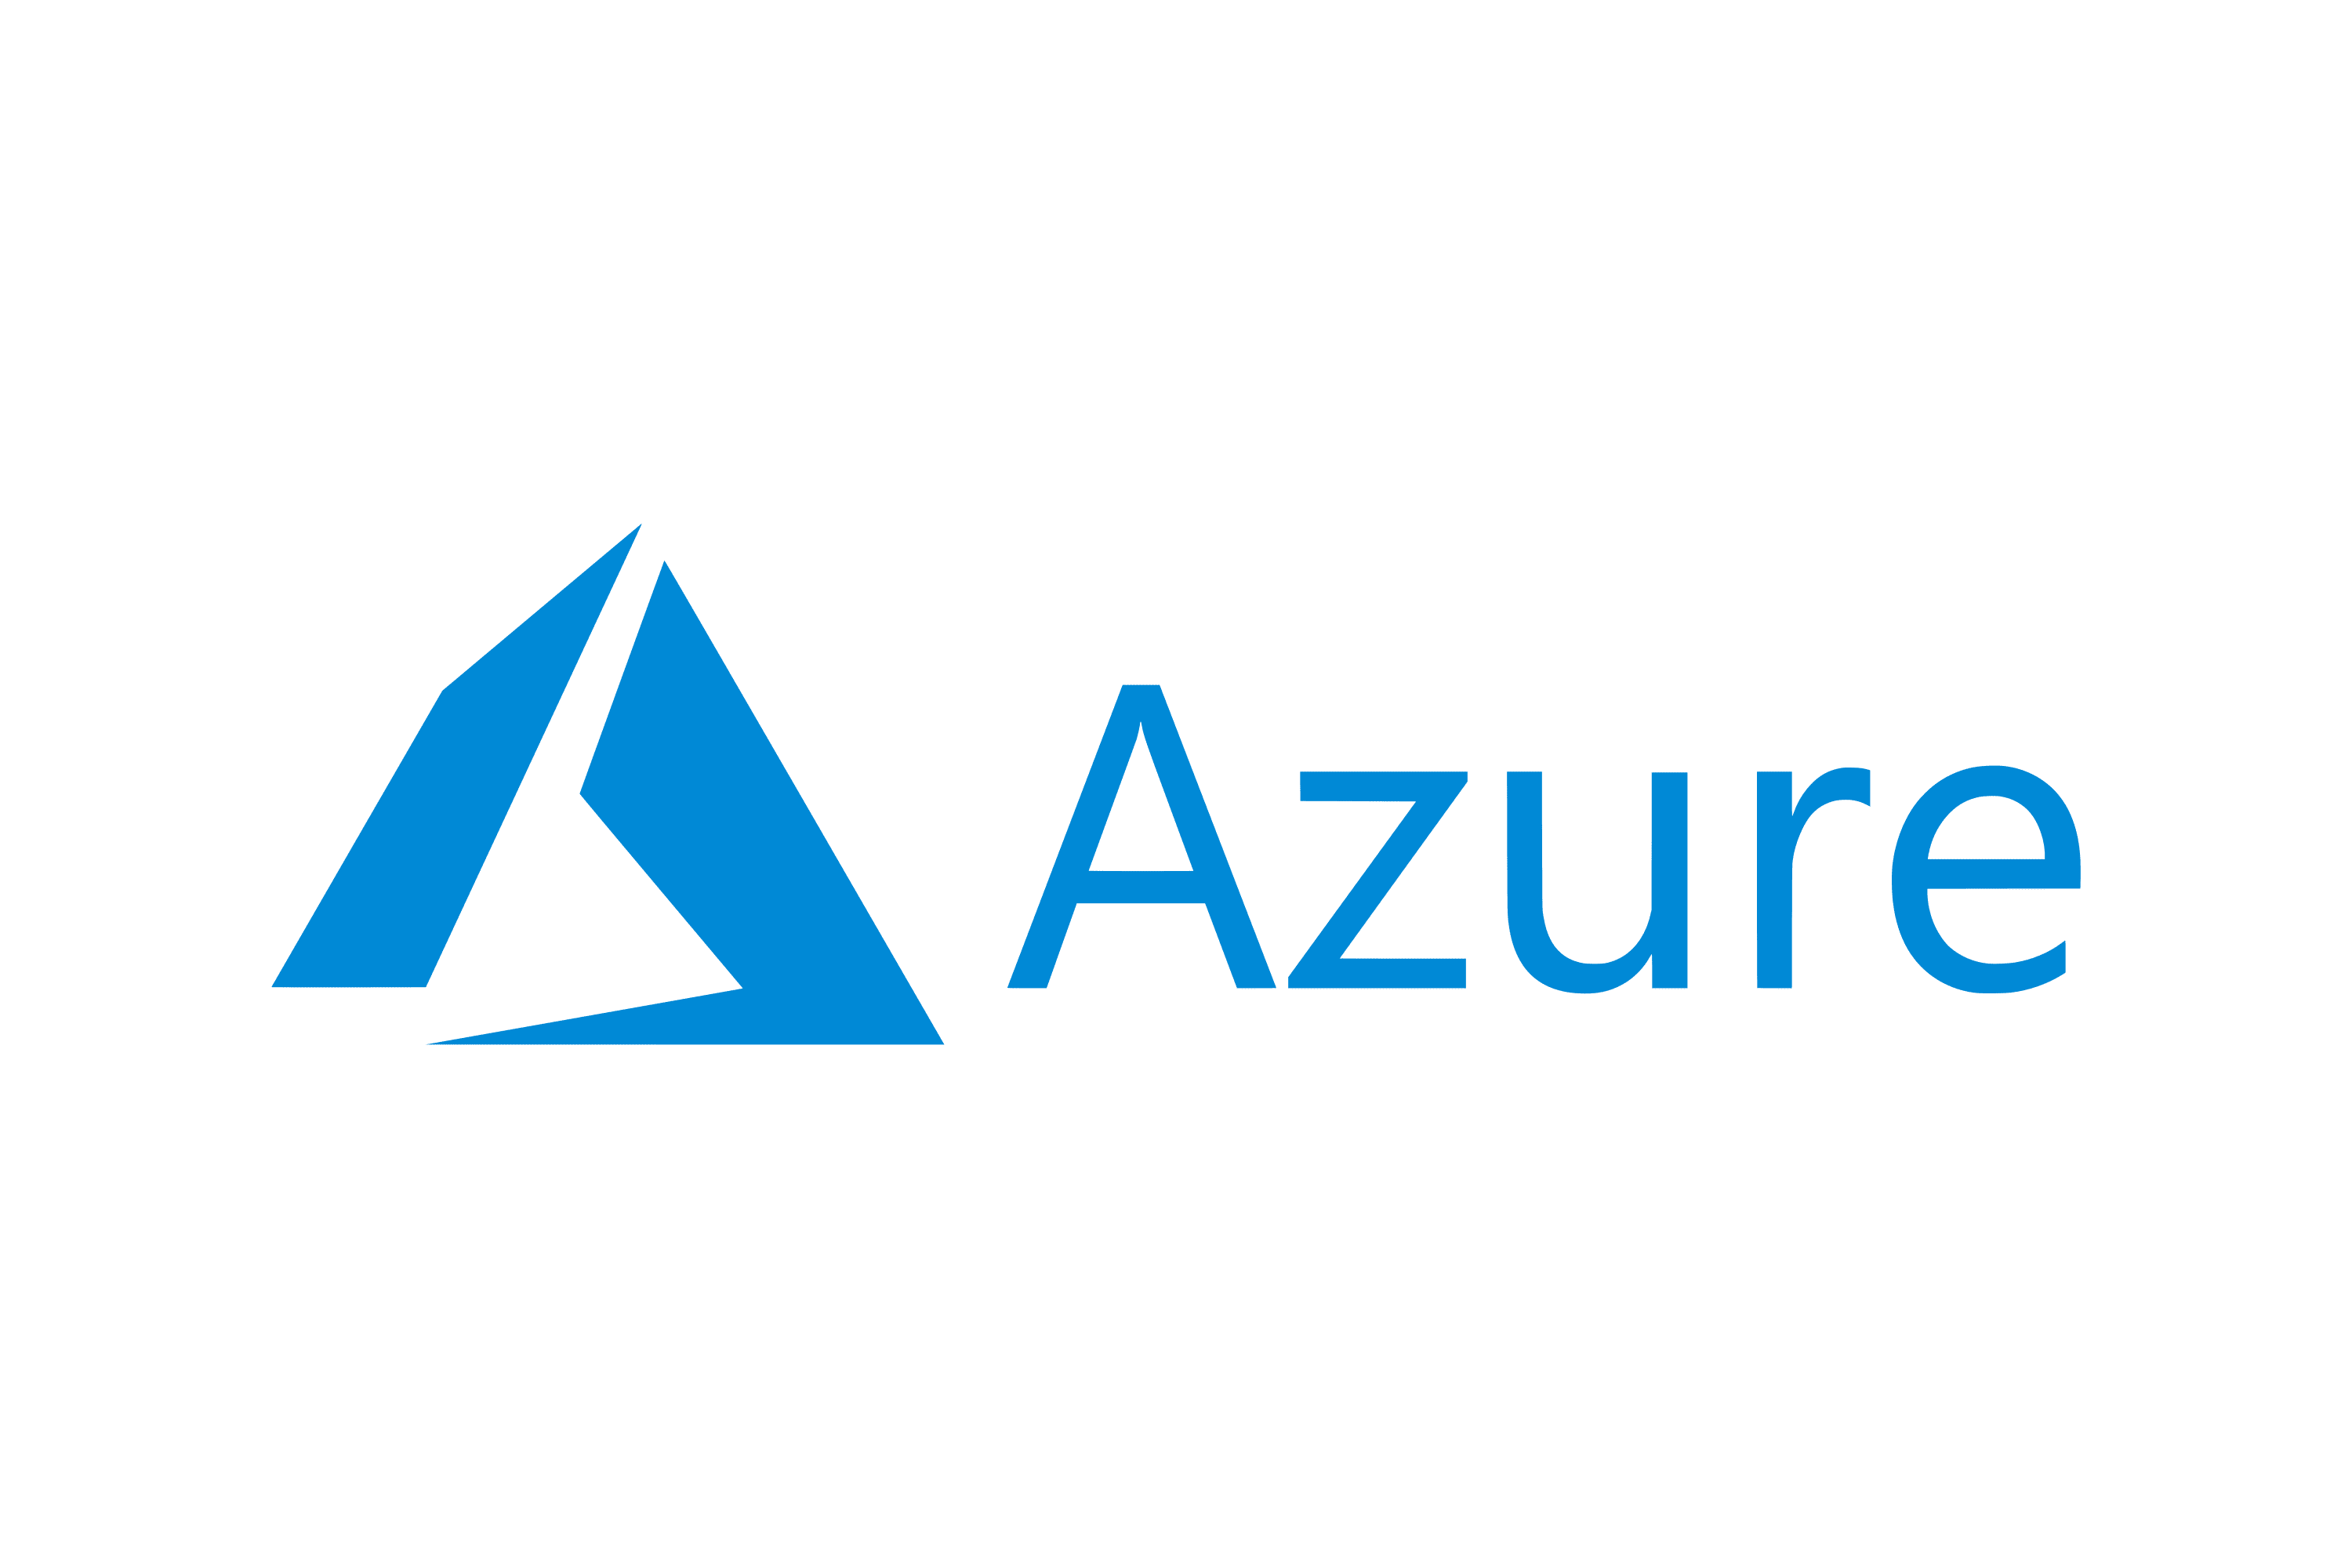 Microsoft Azure Cloud solution